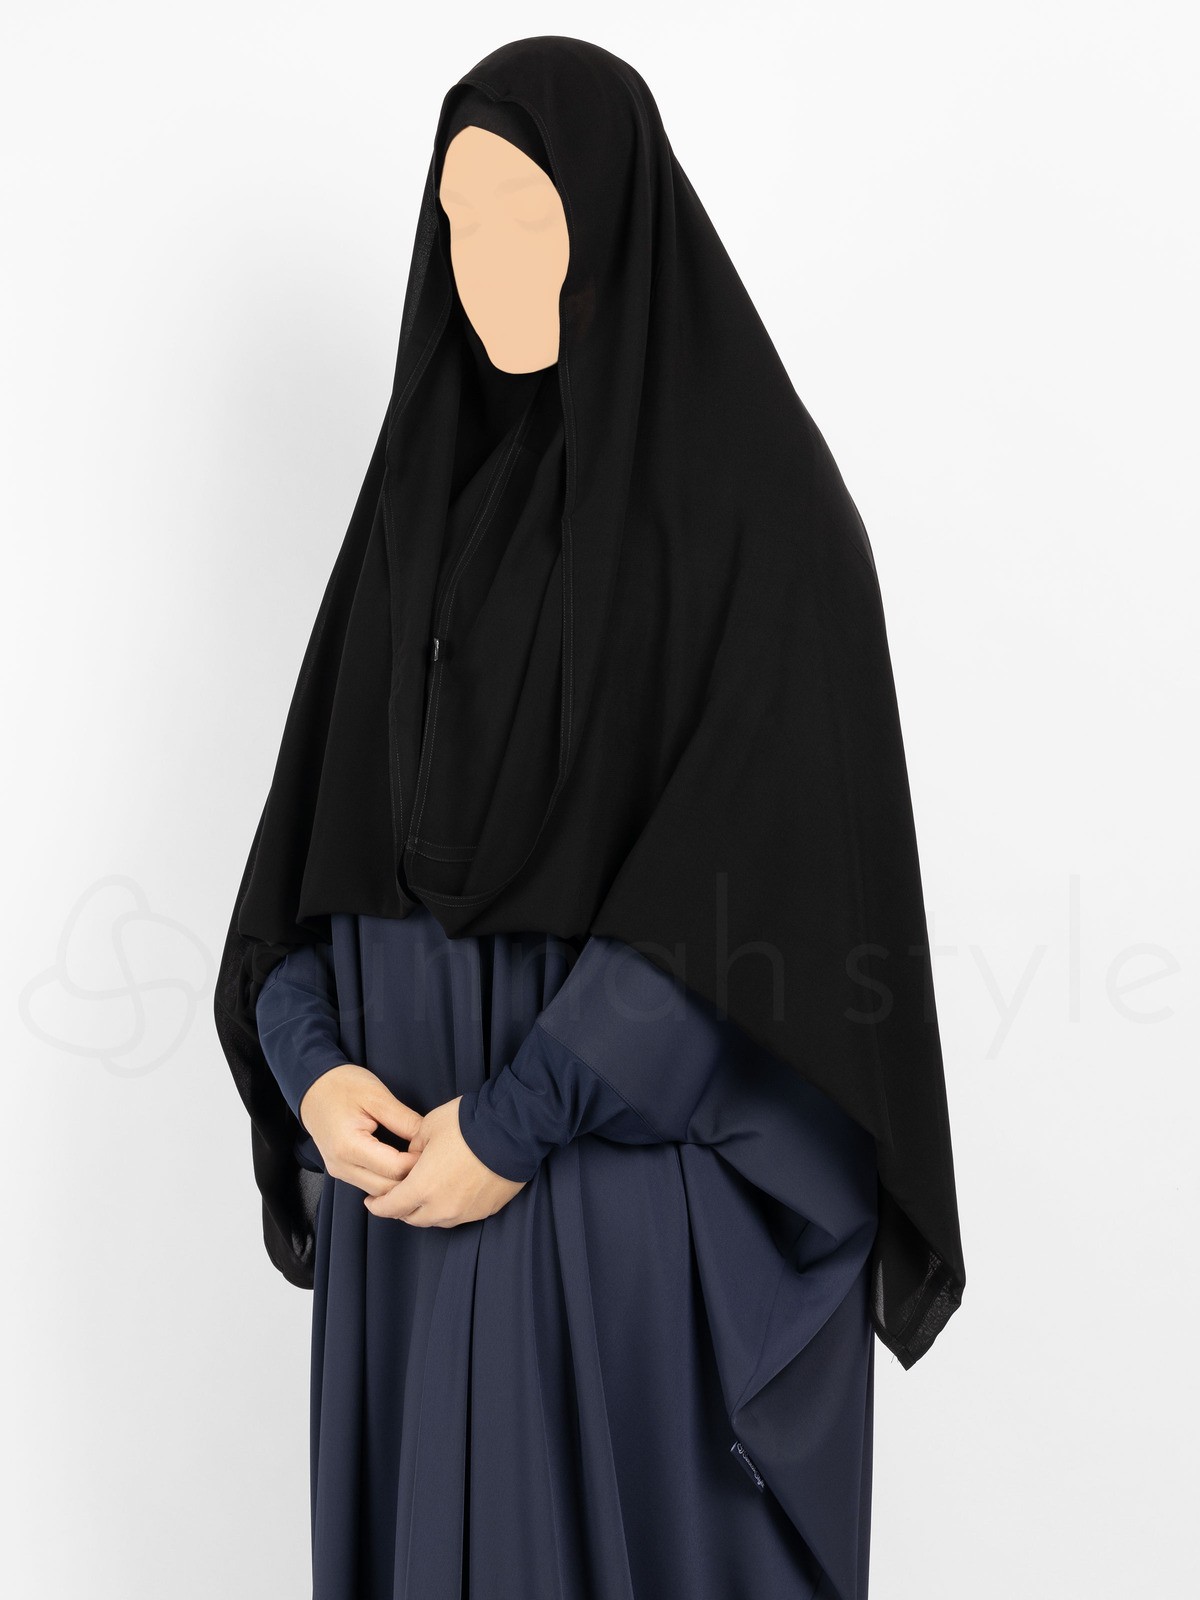 Sunnah Style - Butterfly Hijab (Black)